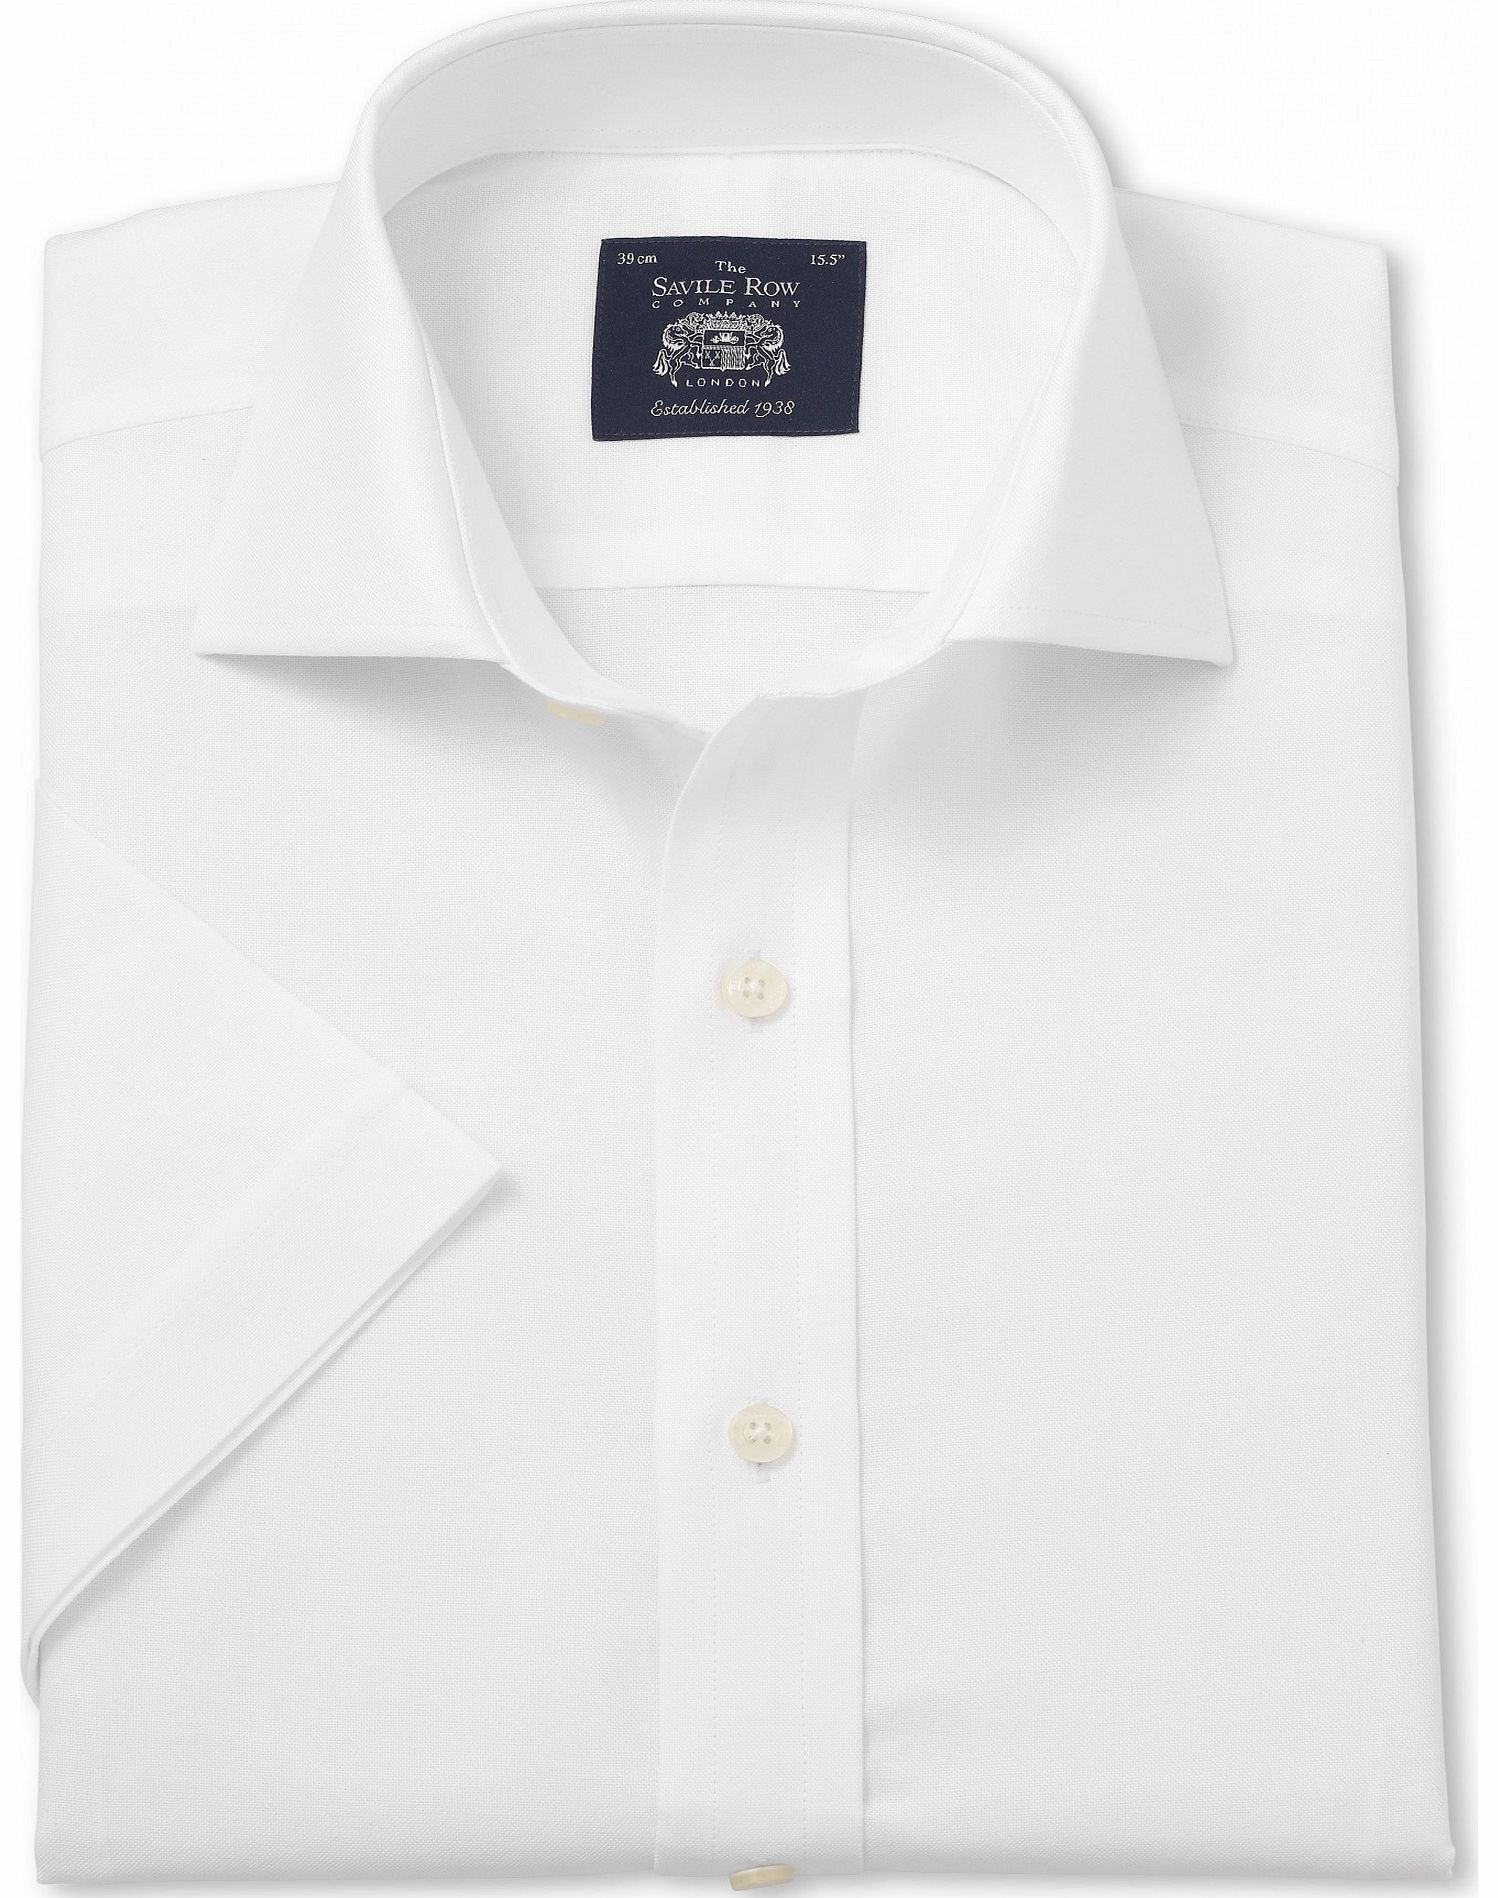 Savile Row Company White Pinpoint Short Sleeve Slim Fit Shirt 15